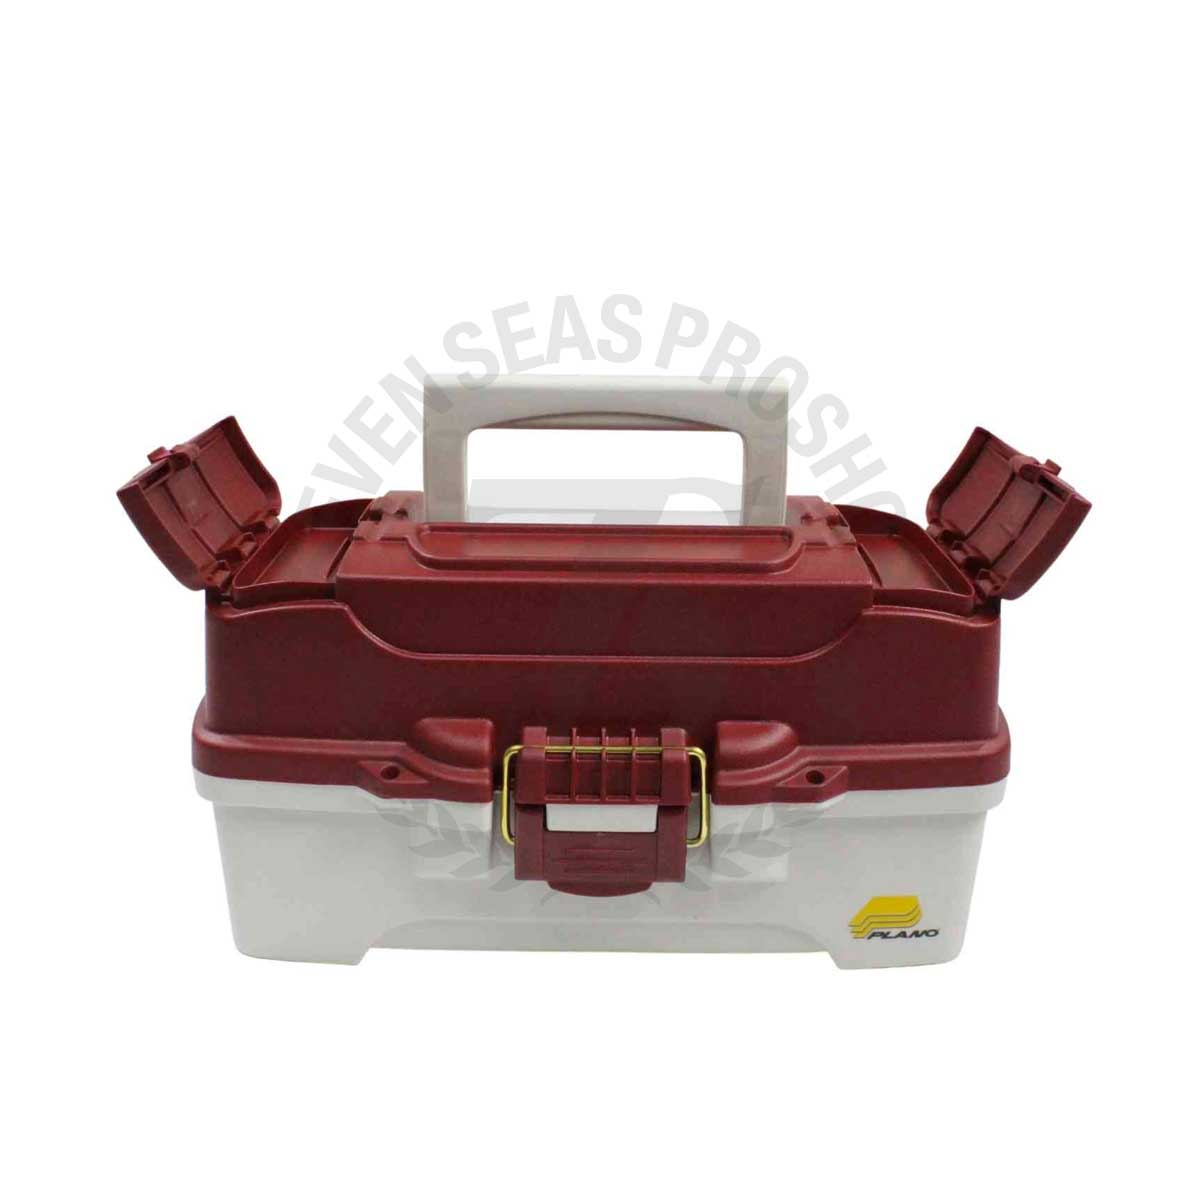 Plano One-Tray Tackle Box Red Metallic/Off-White*กล่องอุปกรณ์ - 7 SEAS  PROSHOP (THAILAND)